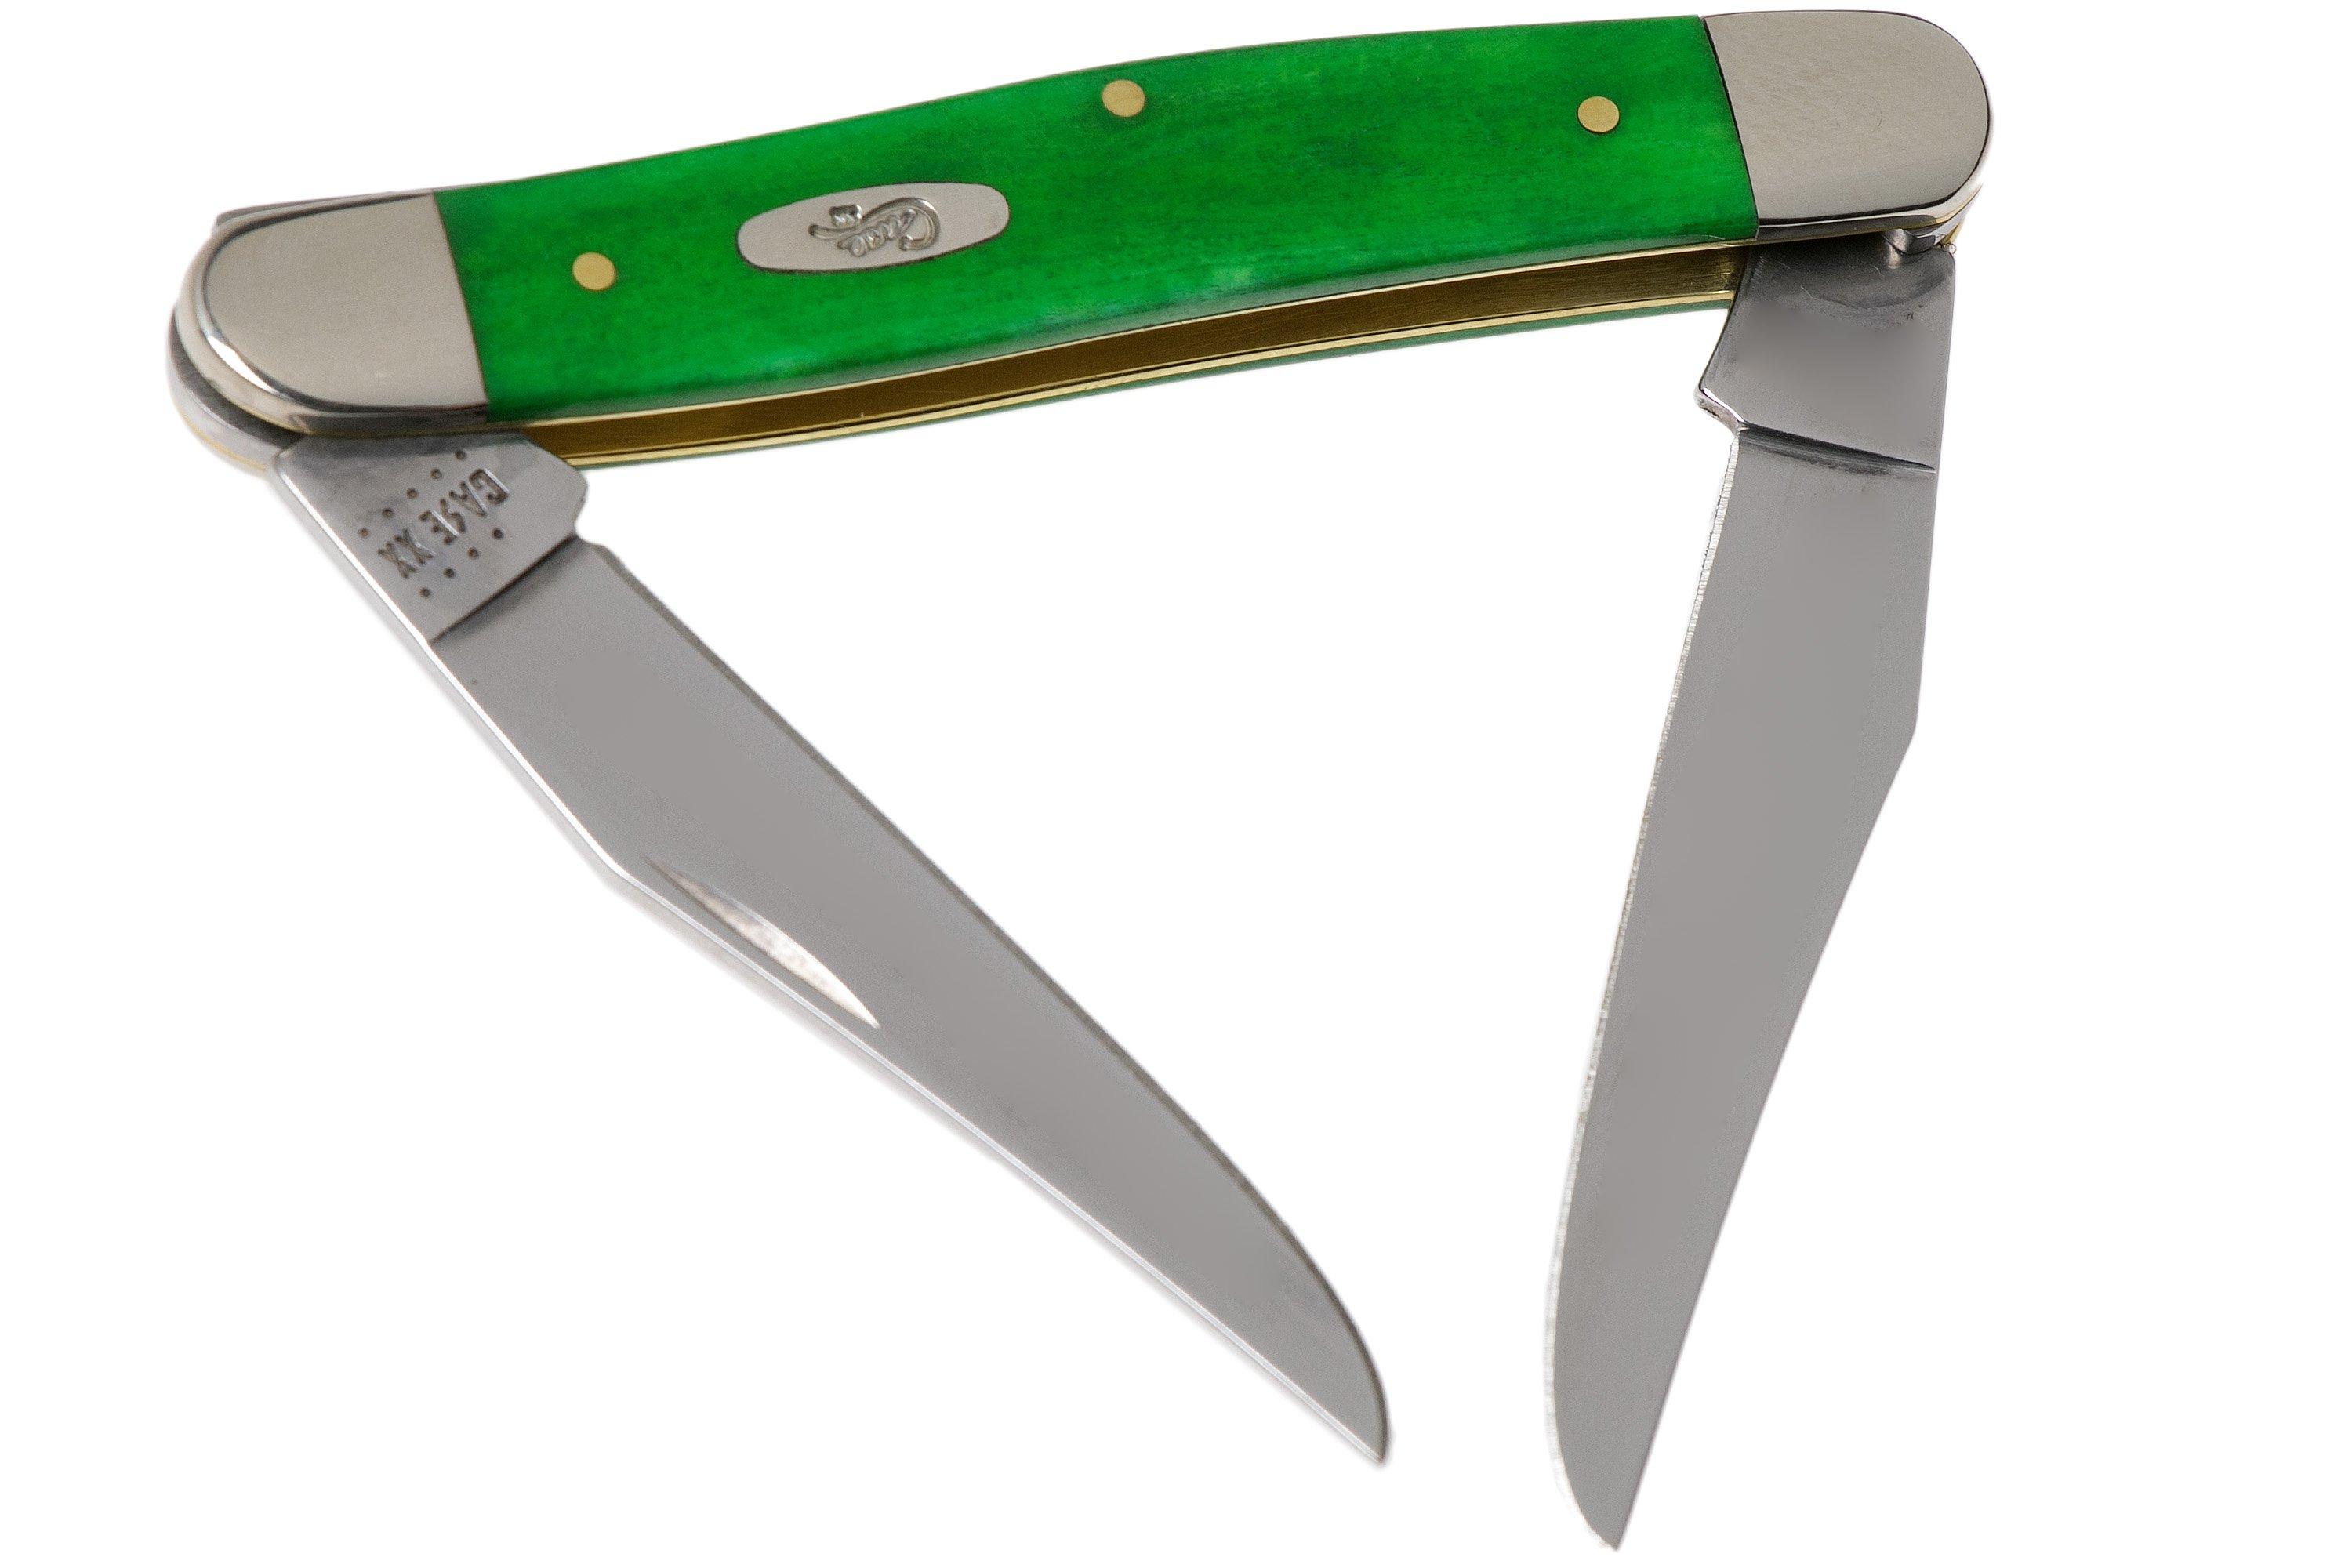 Sharpening Case-xx shaving sharp, how to sharpen Cass trapper